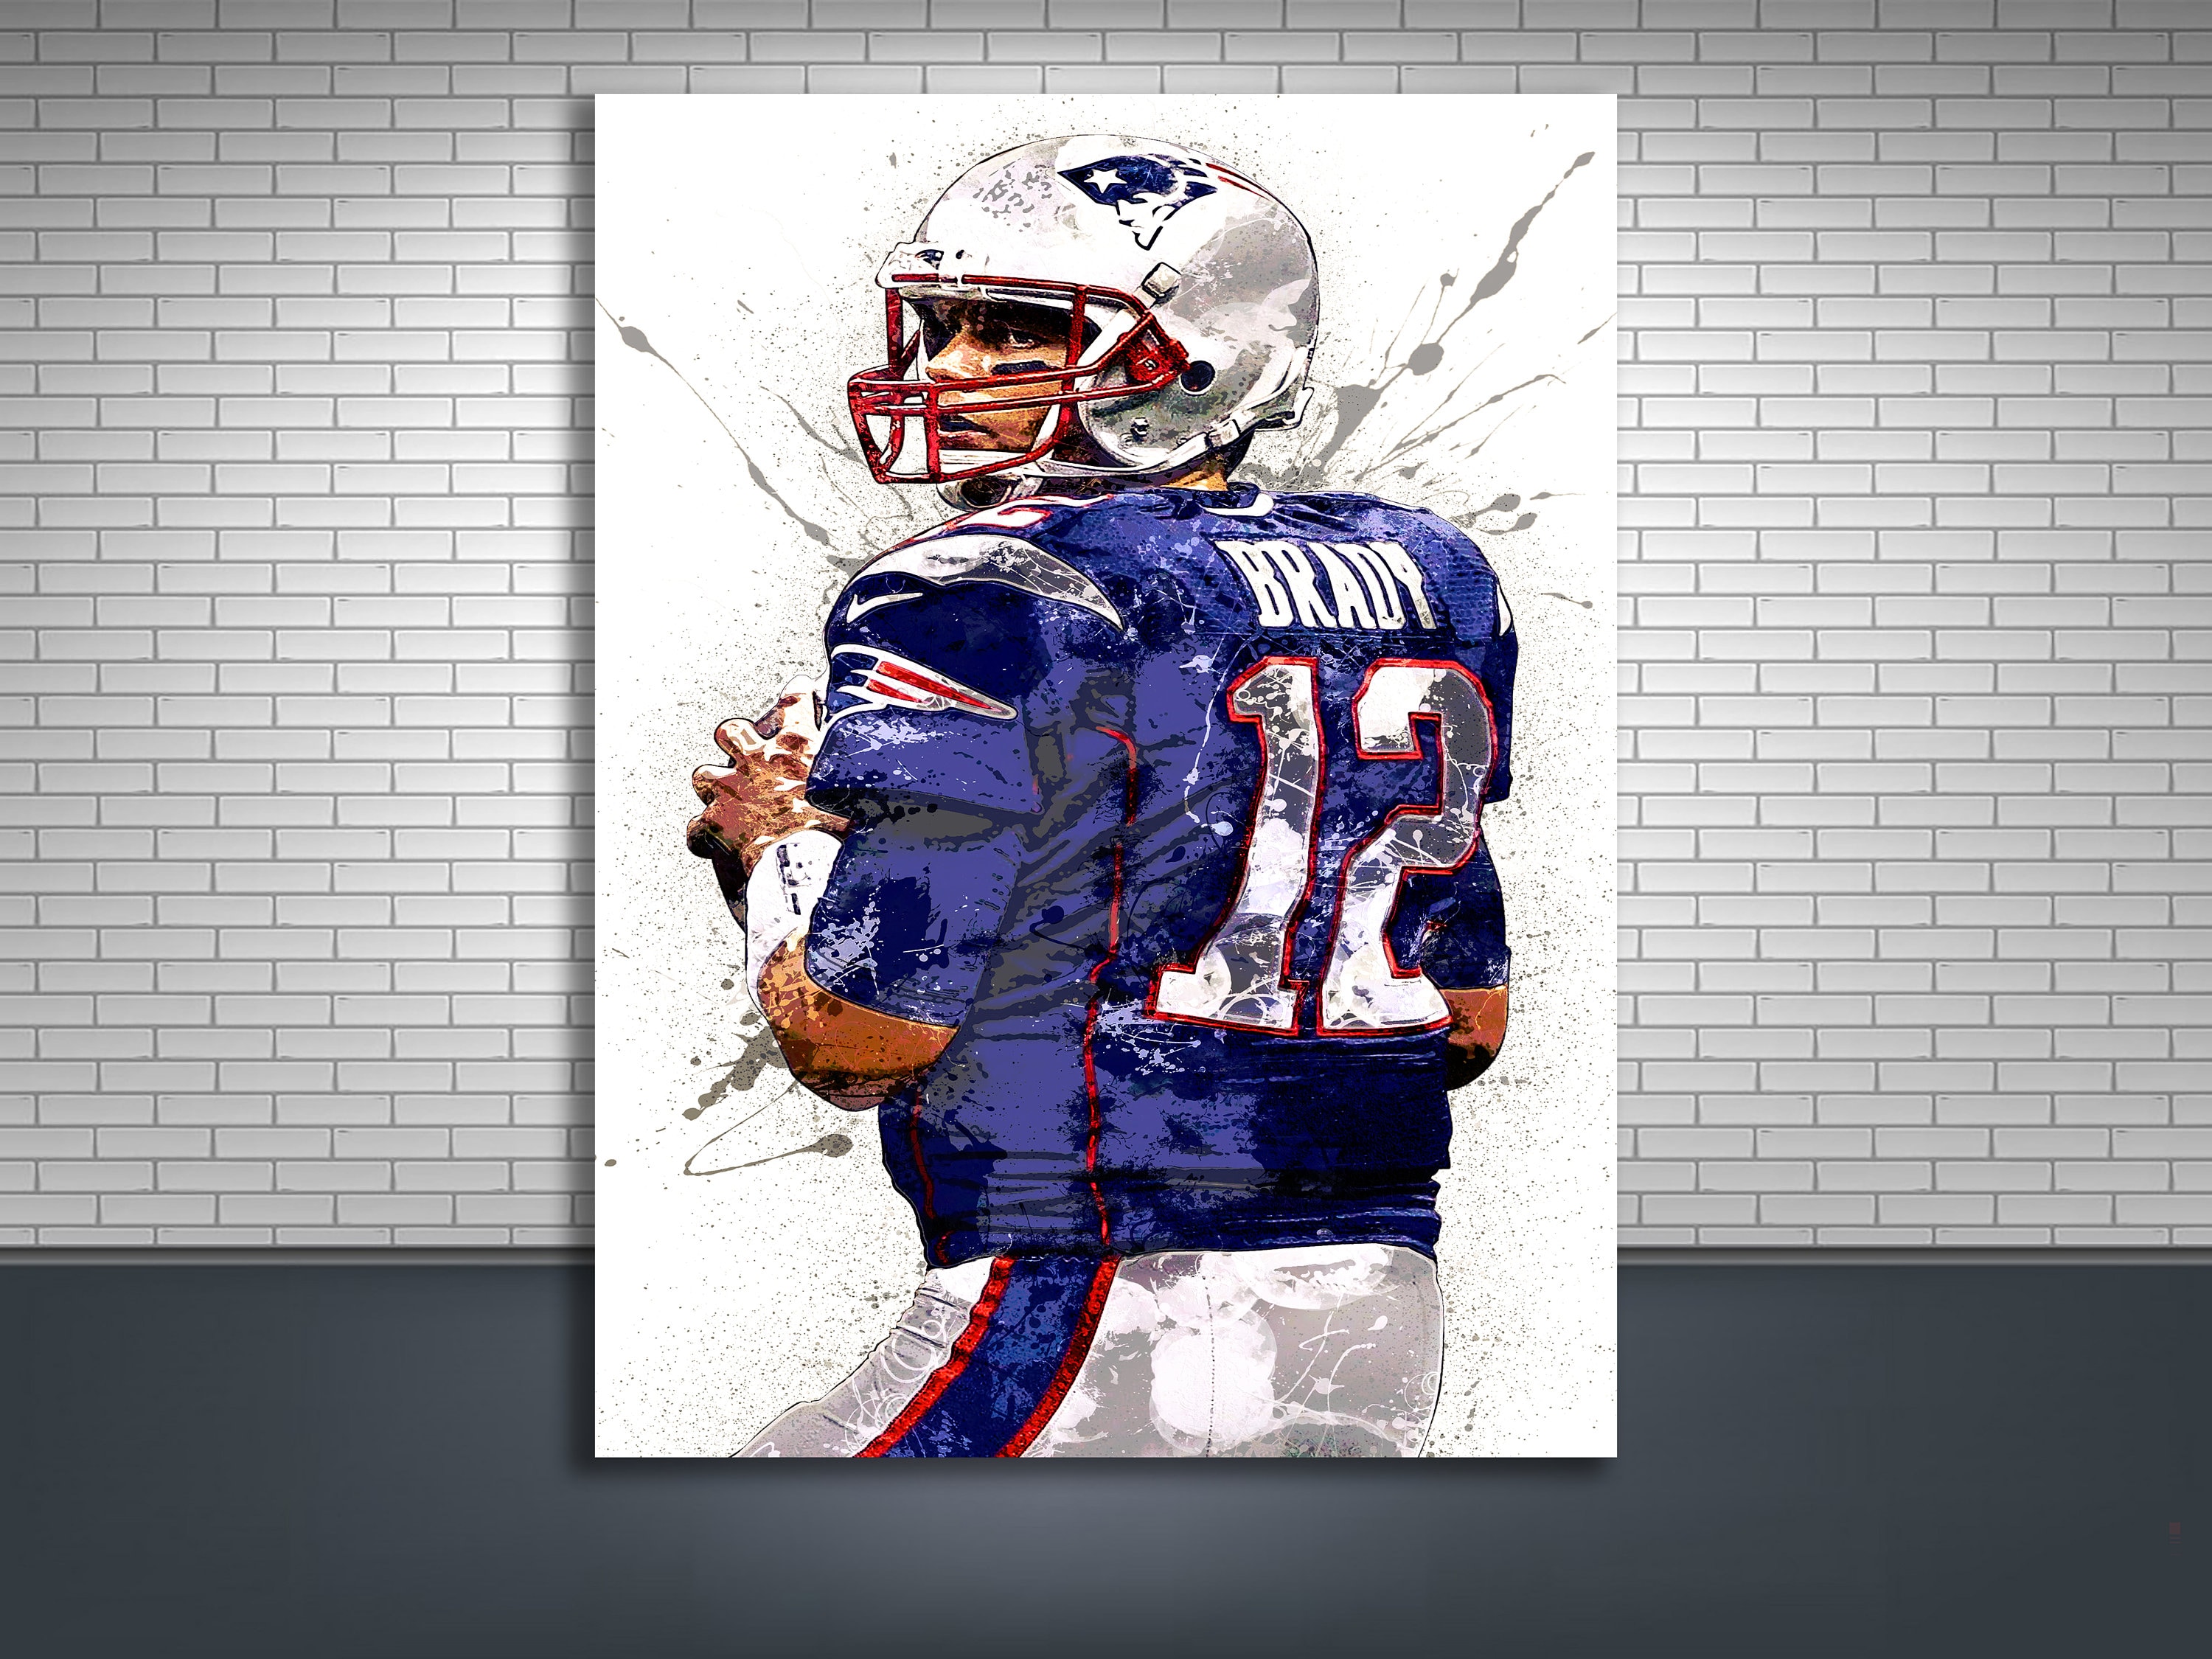 Tom Brady Poster, New England Patriots, Canvas Wrap, Kids room, Man Cave, Bar, Game Room